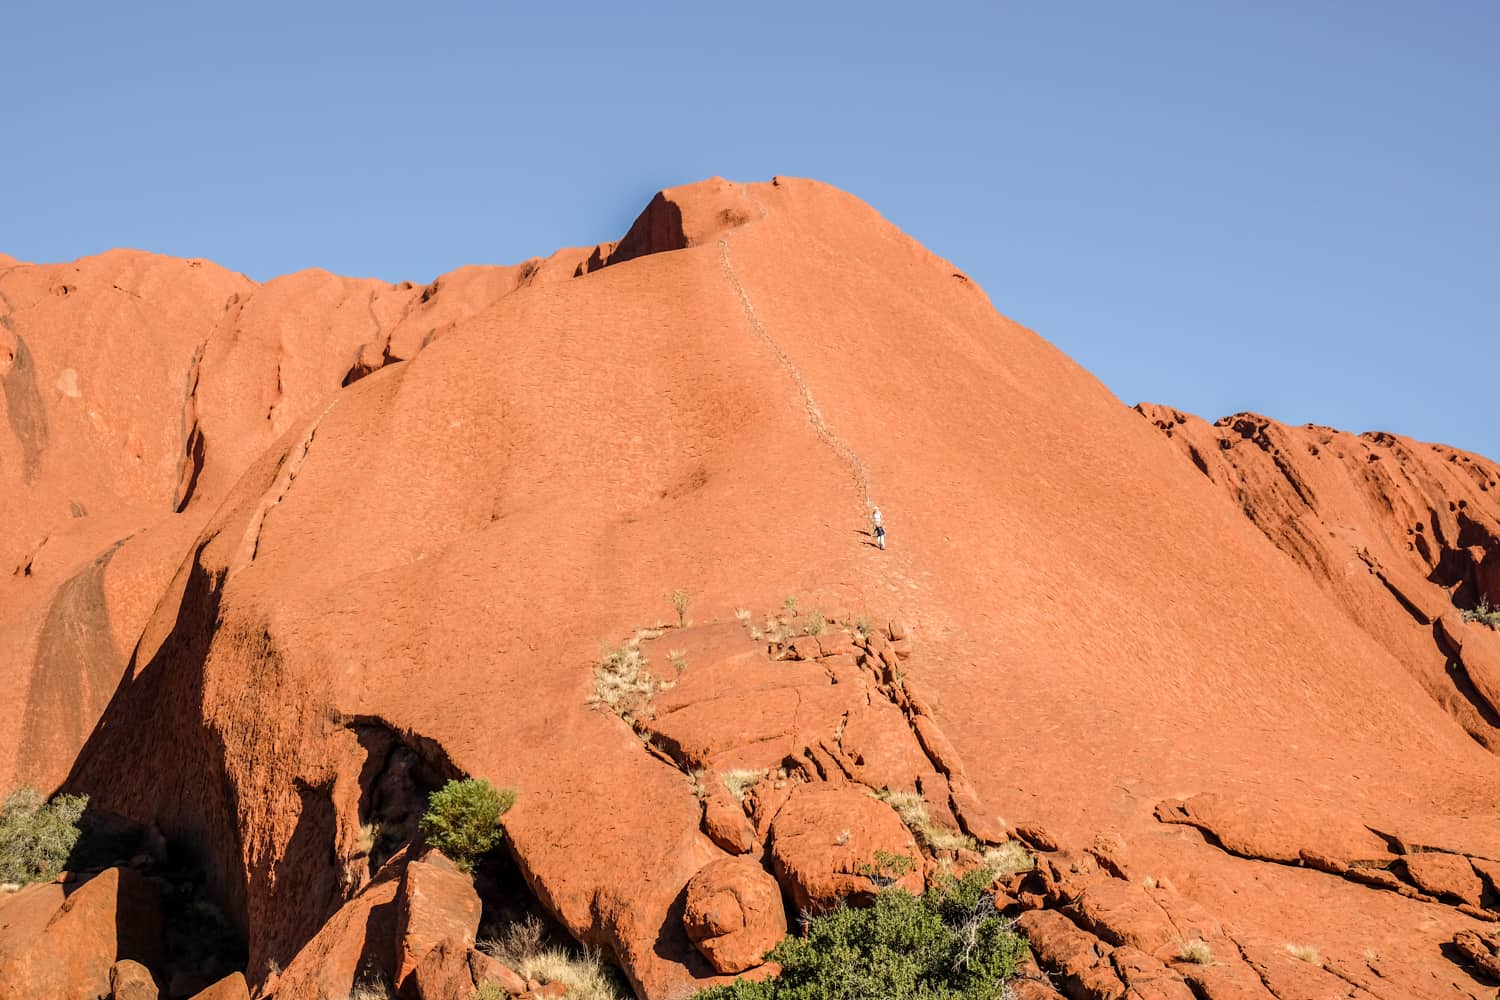 People wrongfully climbing Uluru, the Aboriginal name for Ayers Rock in Australia's Northern Territory. 